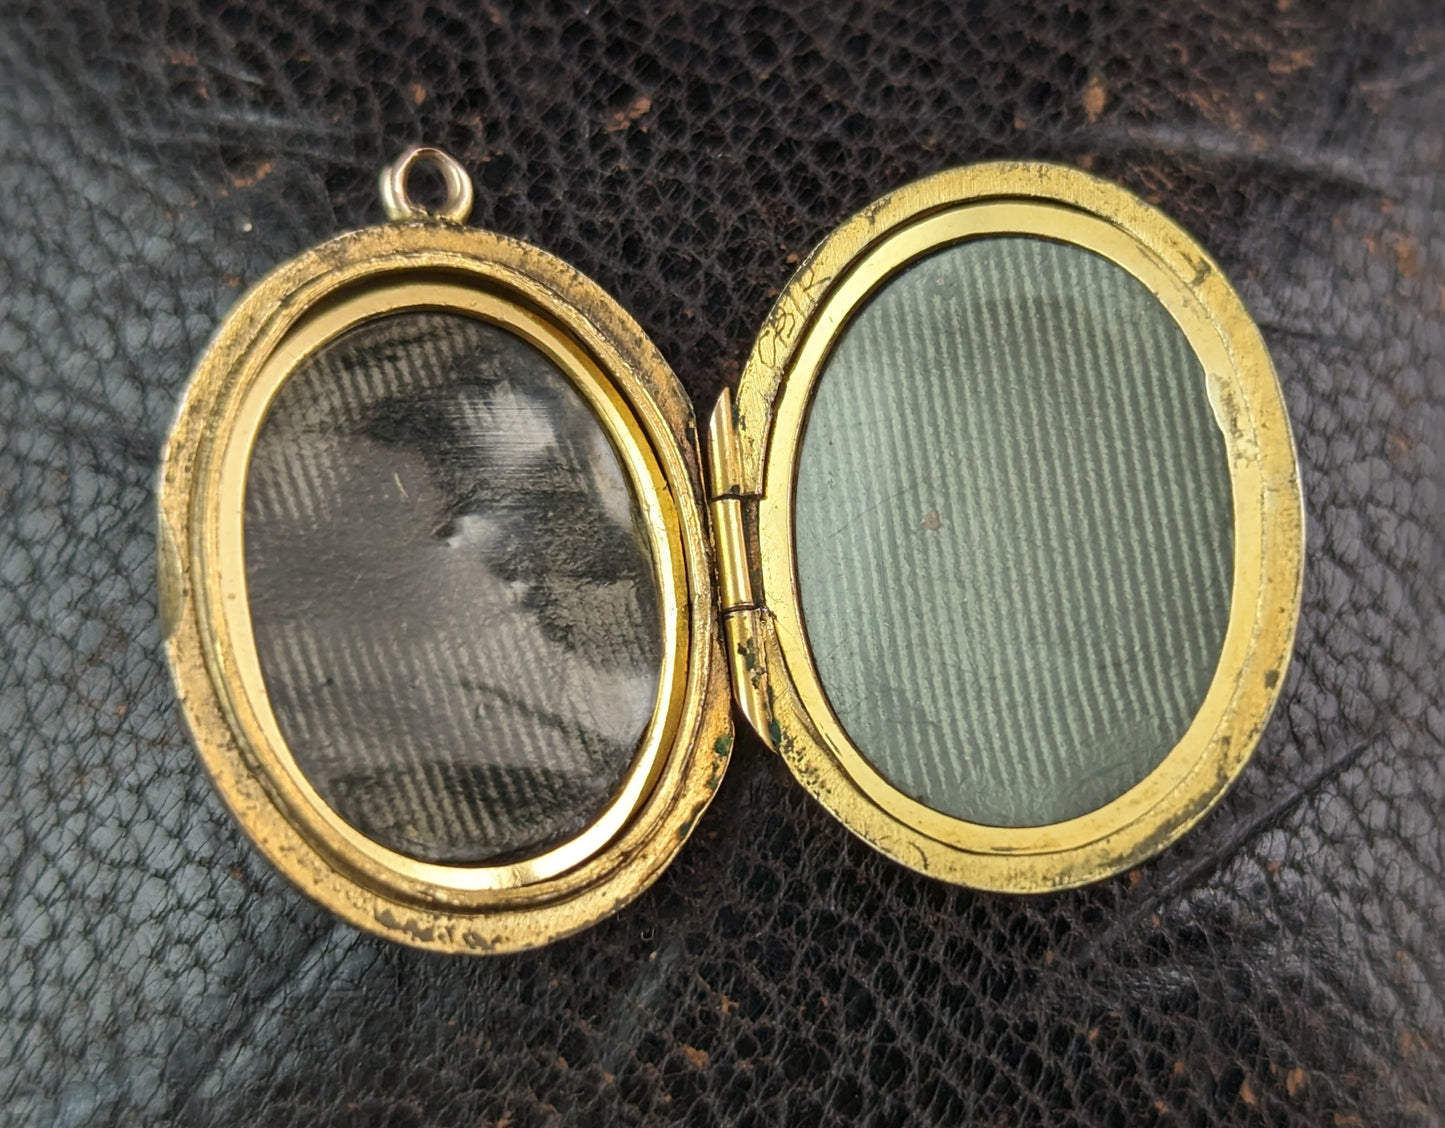 Antique 9ct gold front and back locket pendant, Floral, Edwardian